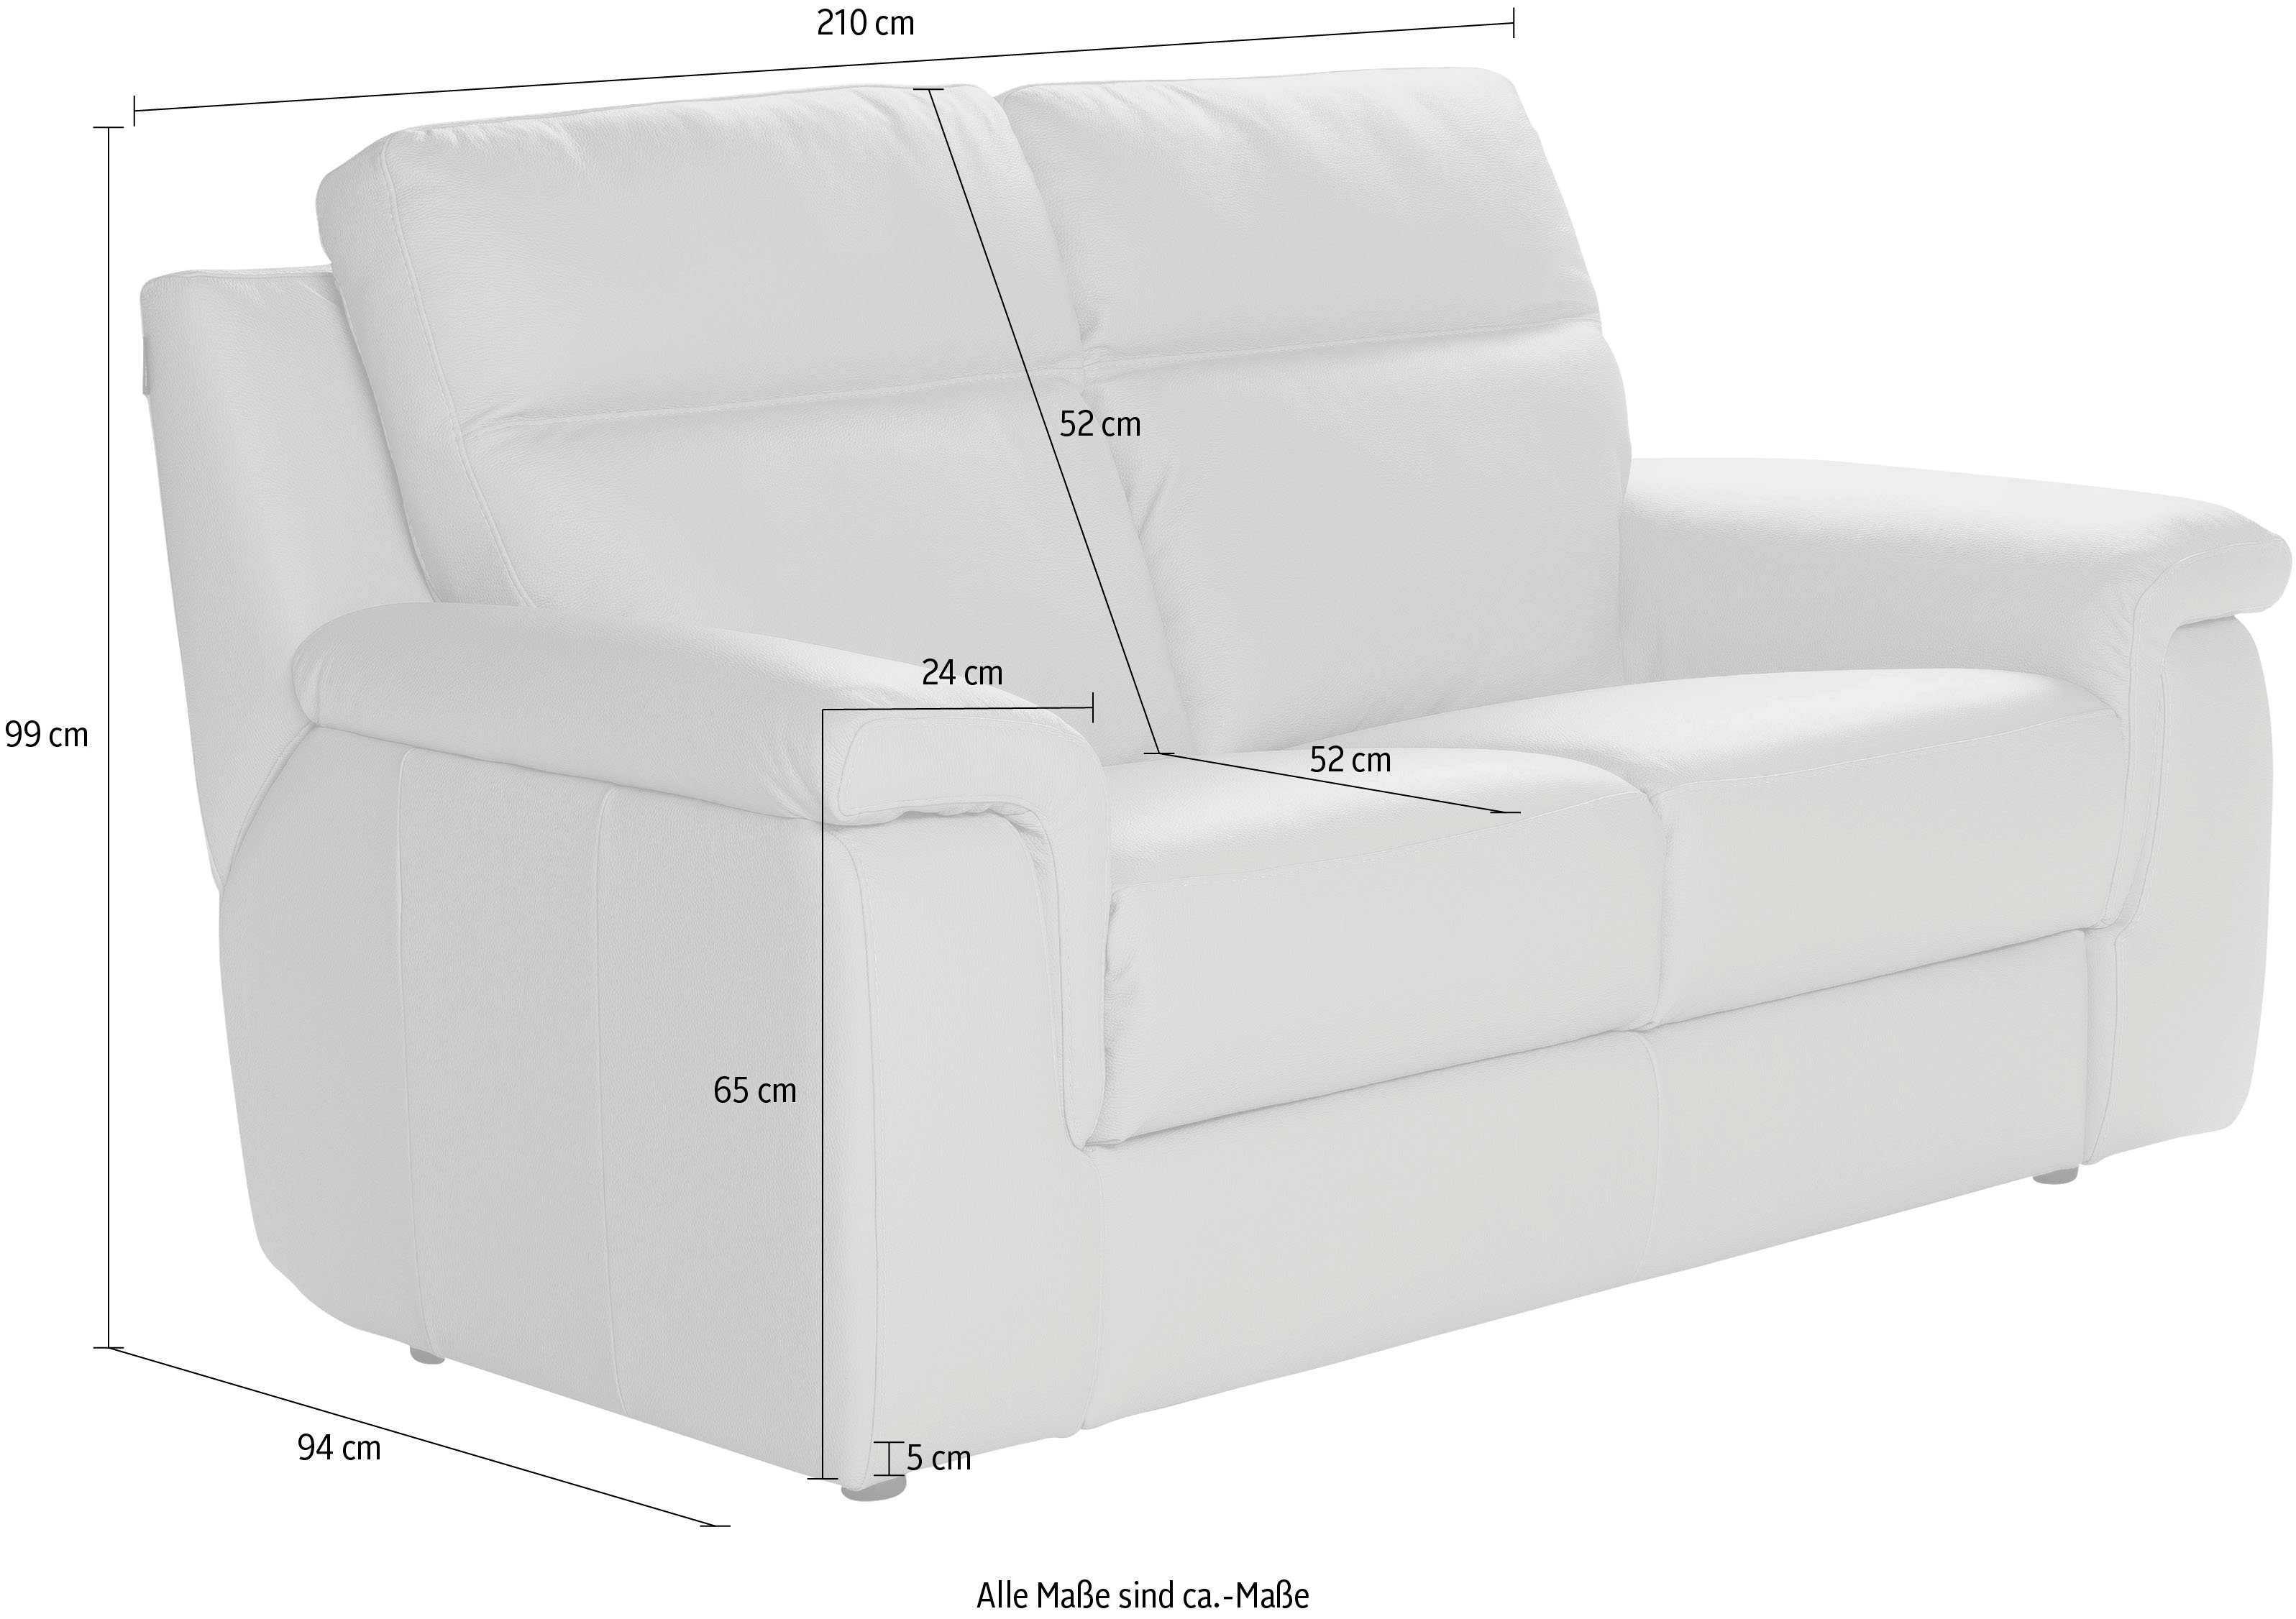 Nicoletti Home 3-Sitzer mit Alan, Relaxfunktion wahlweise Breite 210 cm